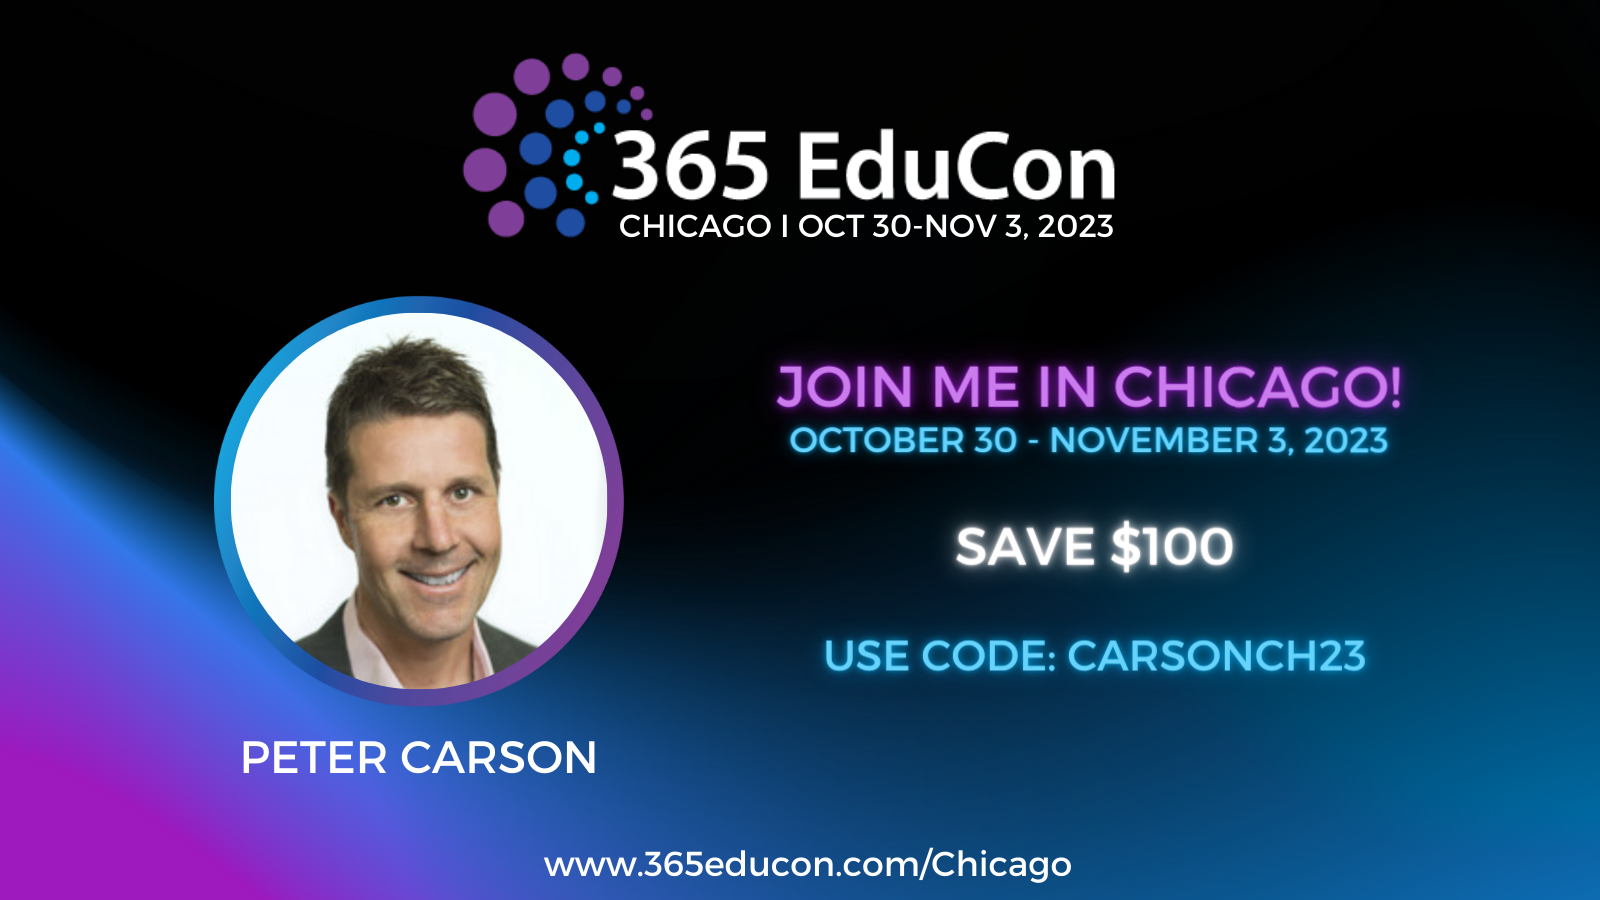 EduCon Chicago 2023 Discount Code